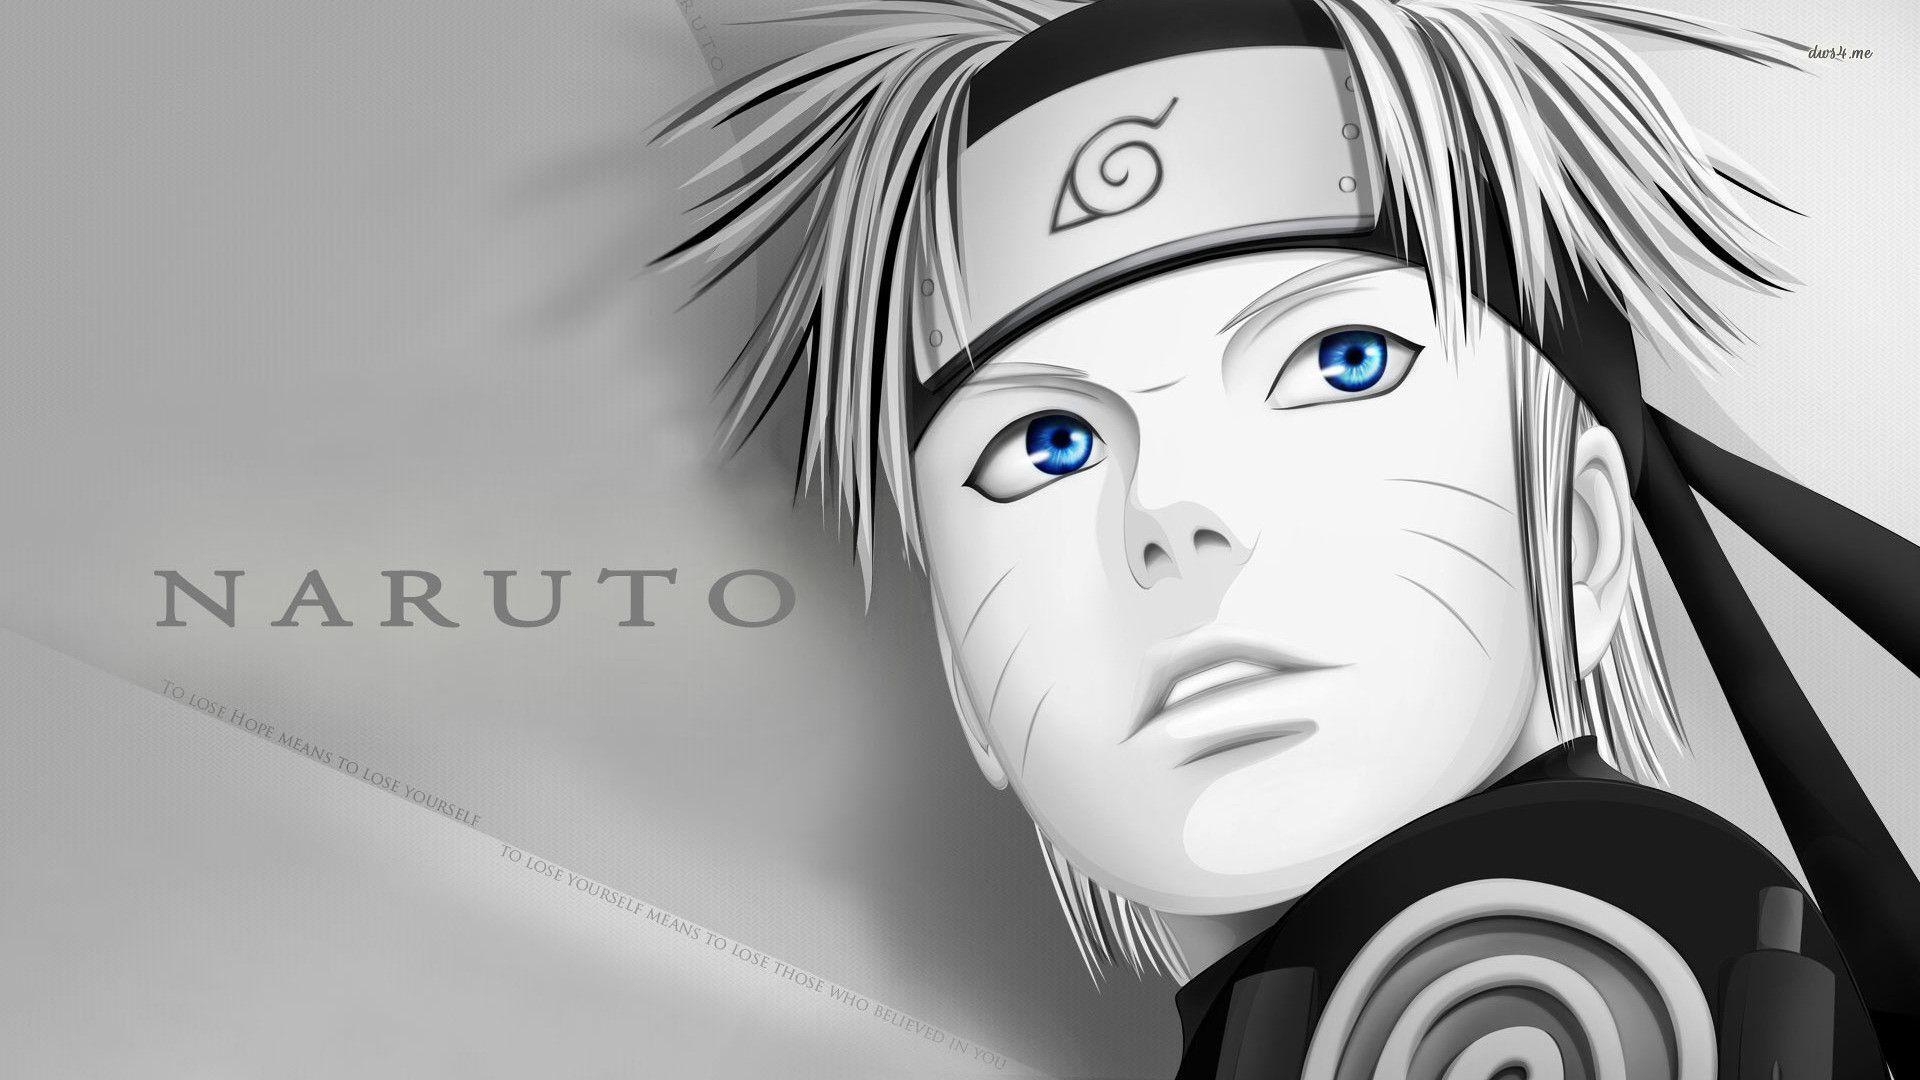 Naruto. Full HD Wallpaper, download 1080p desktop background